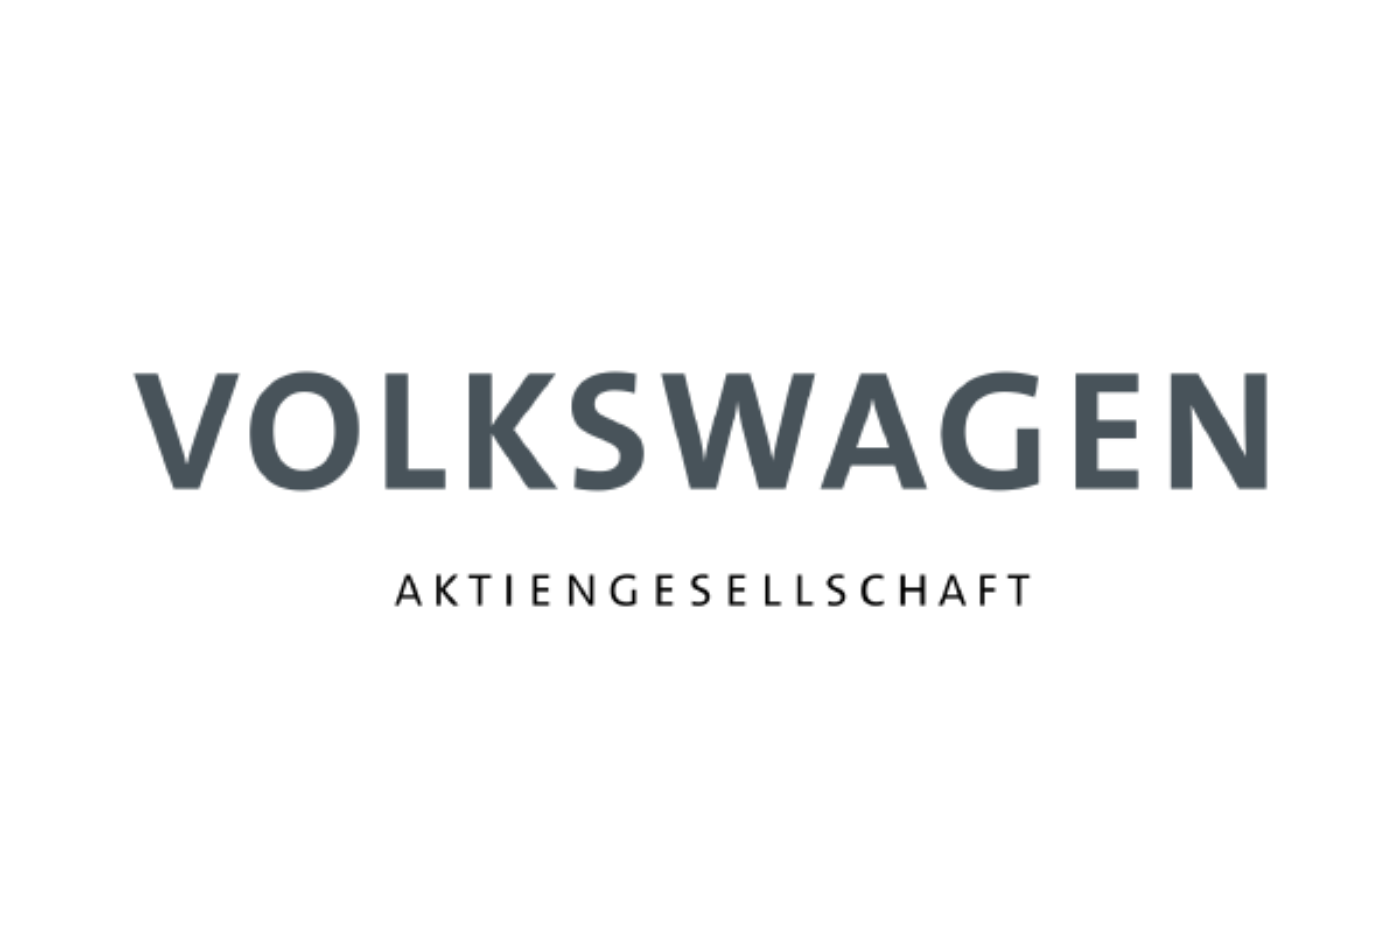 Volkswagen VW Aktiengesellschaft Firmenlogo 600x400